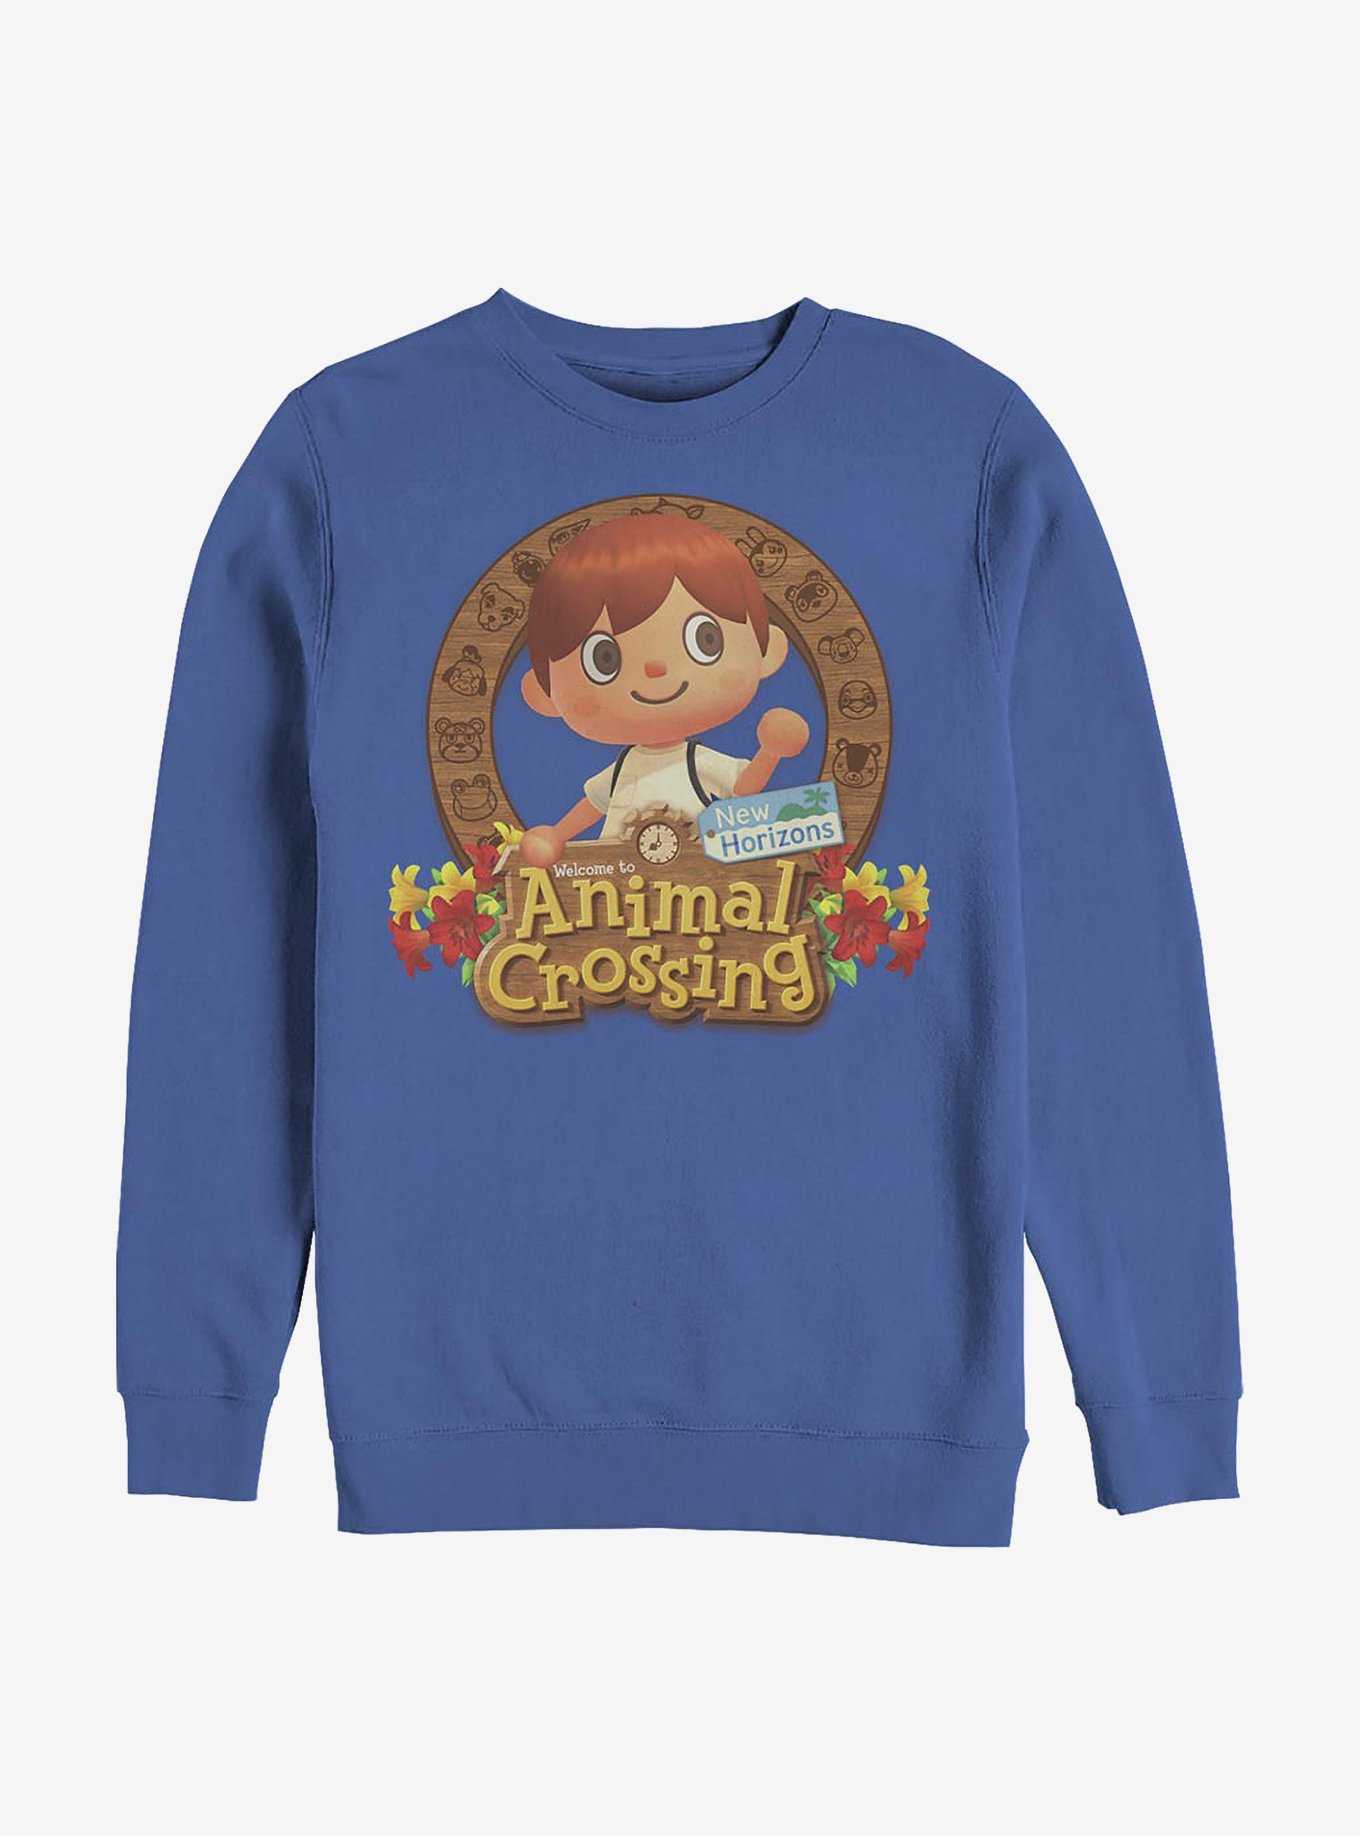 Nintendo Animal Crossing Villager Emblem Crew Sweatshirt, , hi-res